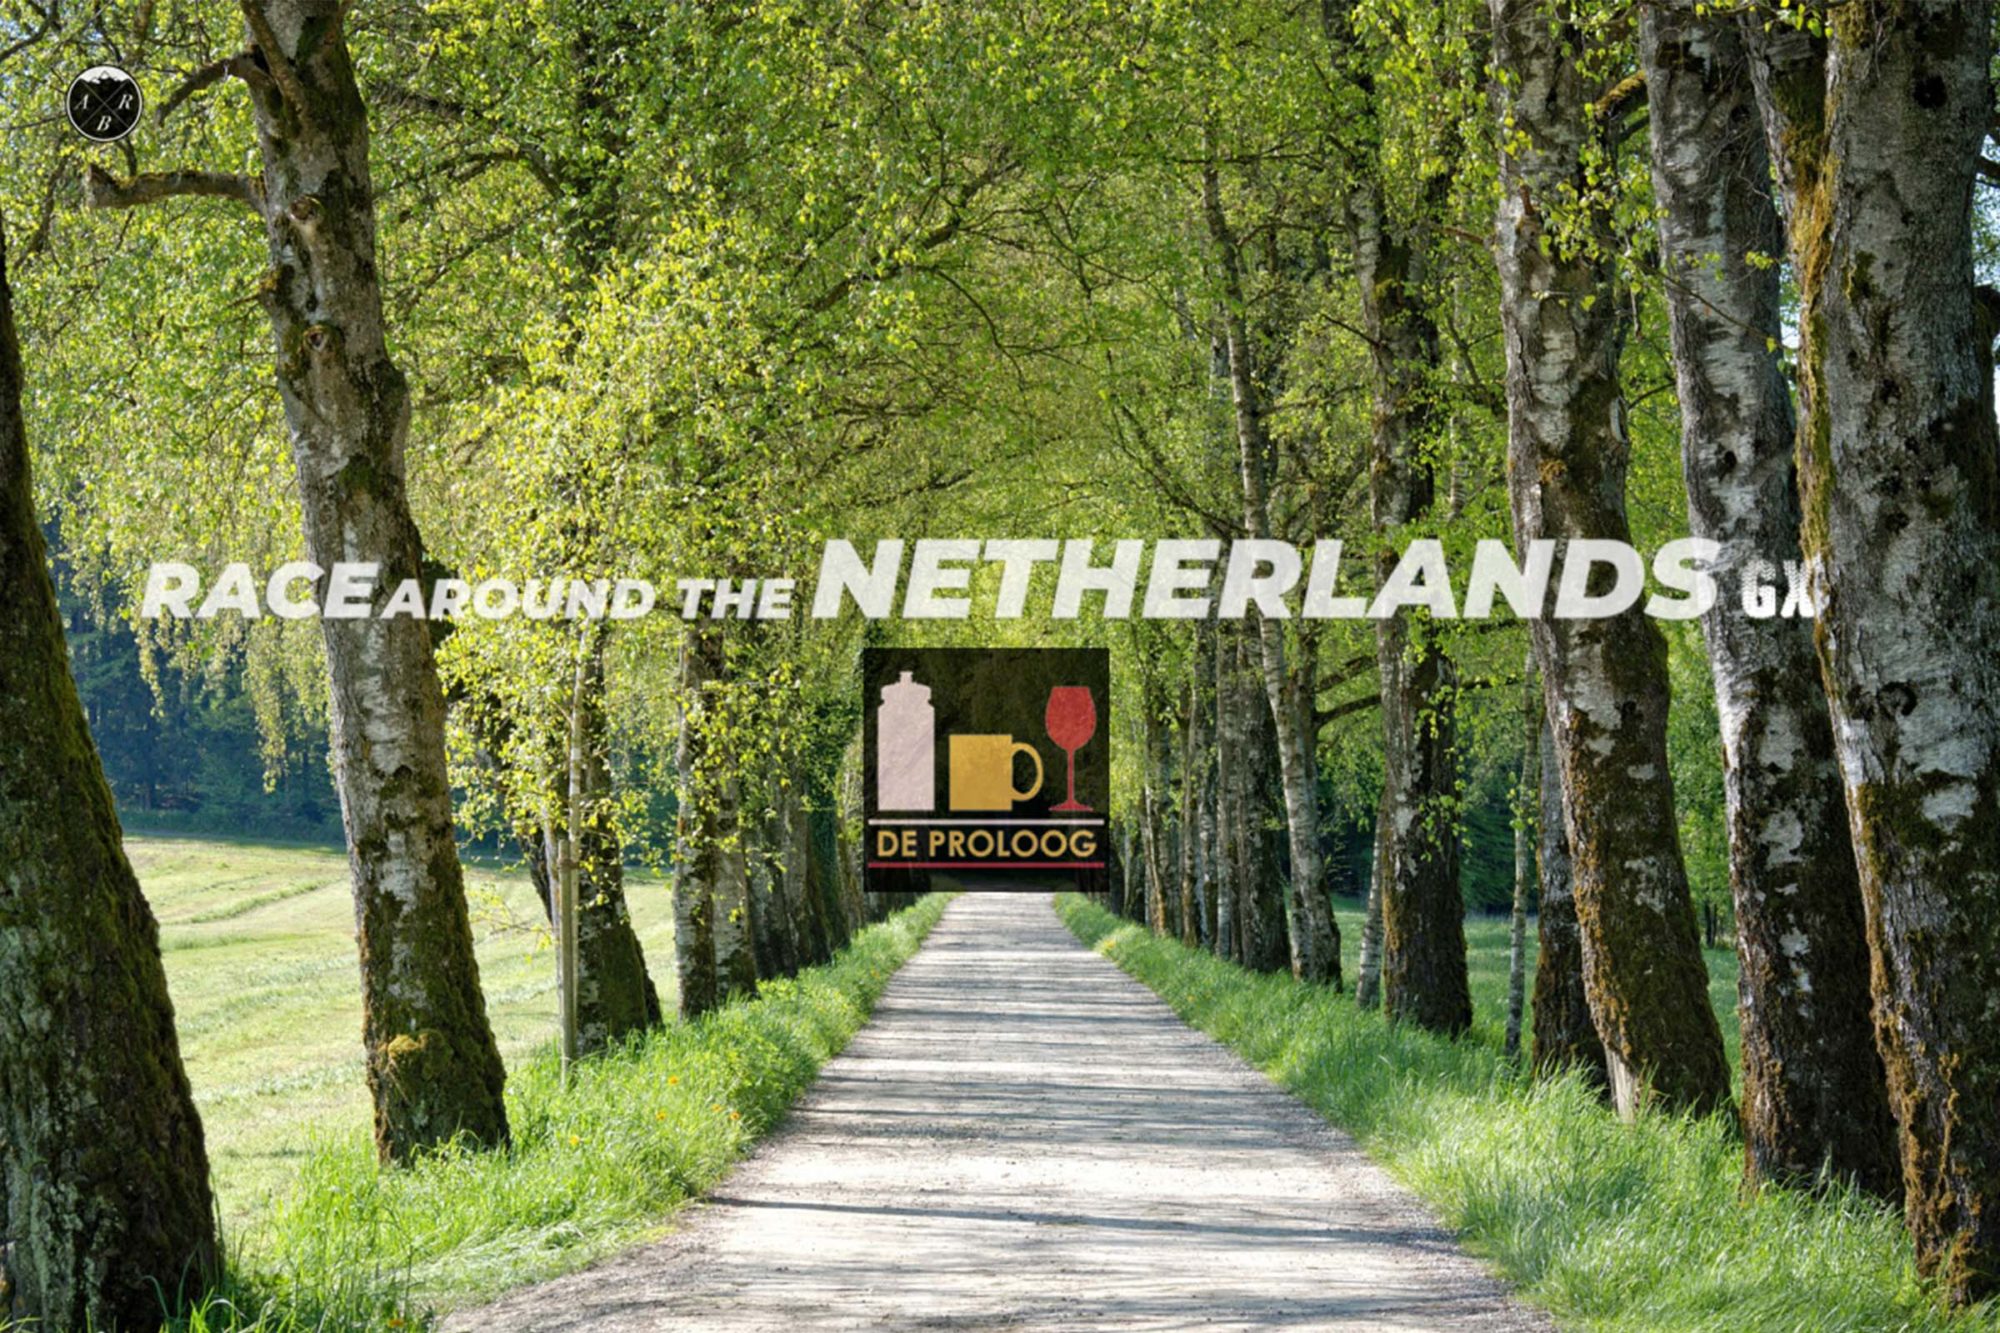 Race around The Netherlands GX